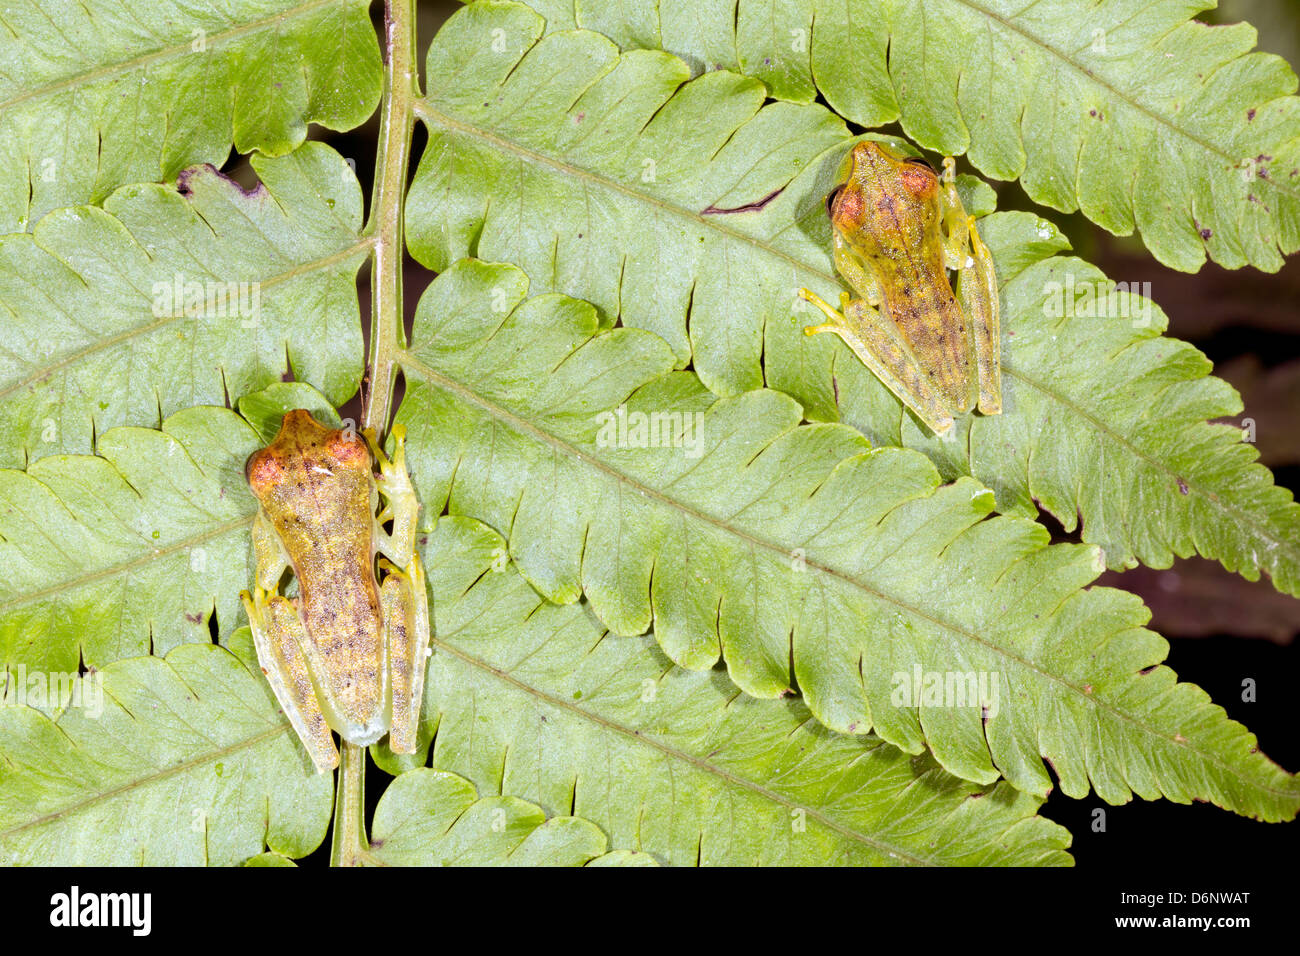 Two juvenile Gunther's Banded Treefrogs (Hypsiboas fasciatus) on a leaf in the rainforest, Ecuador Stock Photo